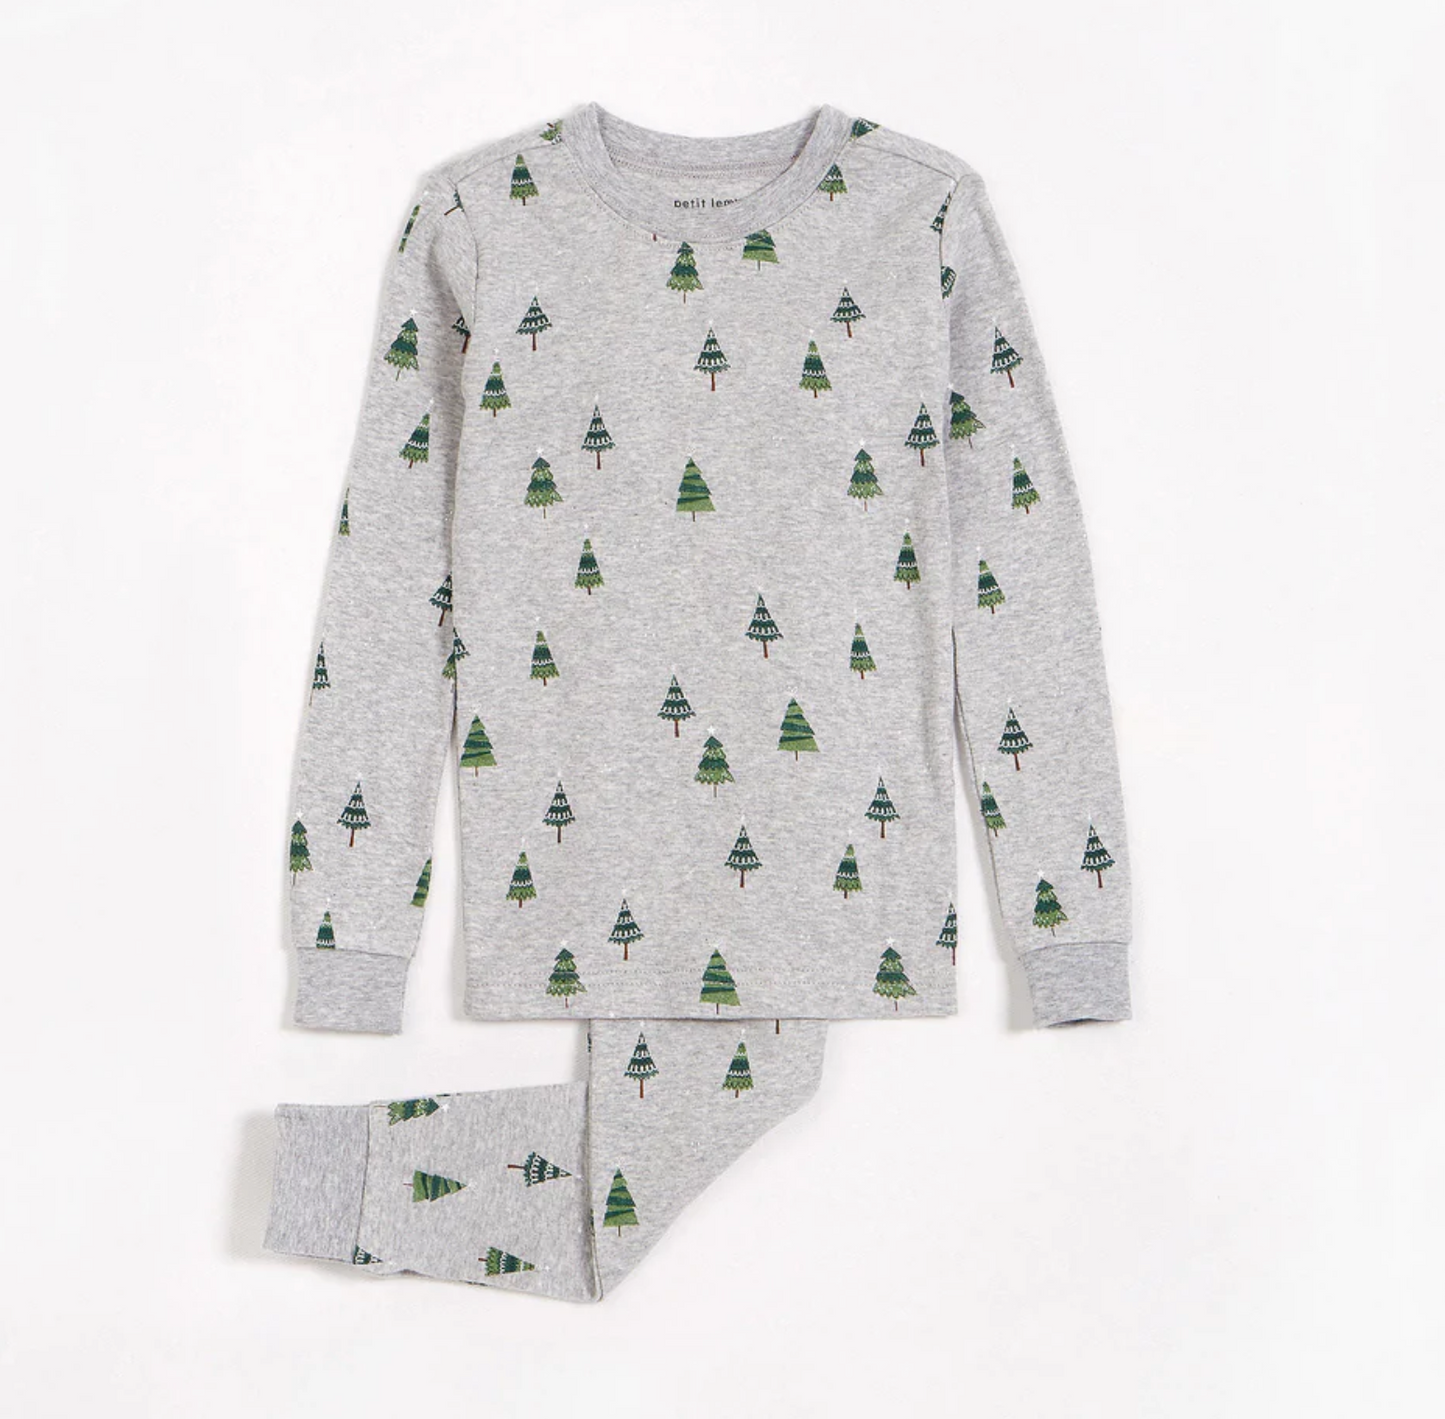 O Christmas Tree Print on Heather Grey PJ Set